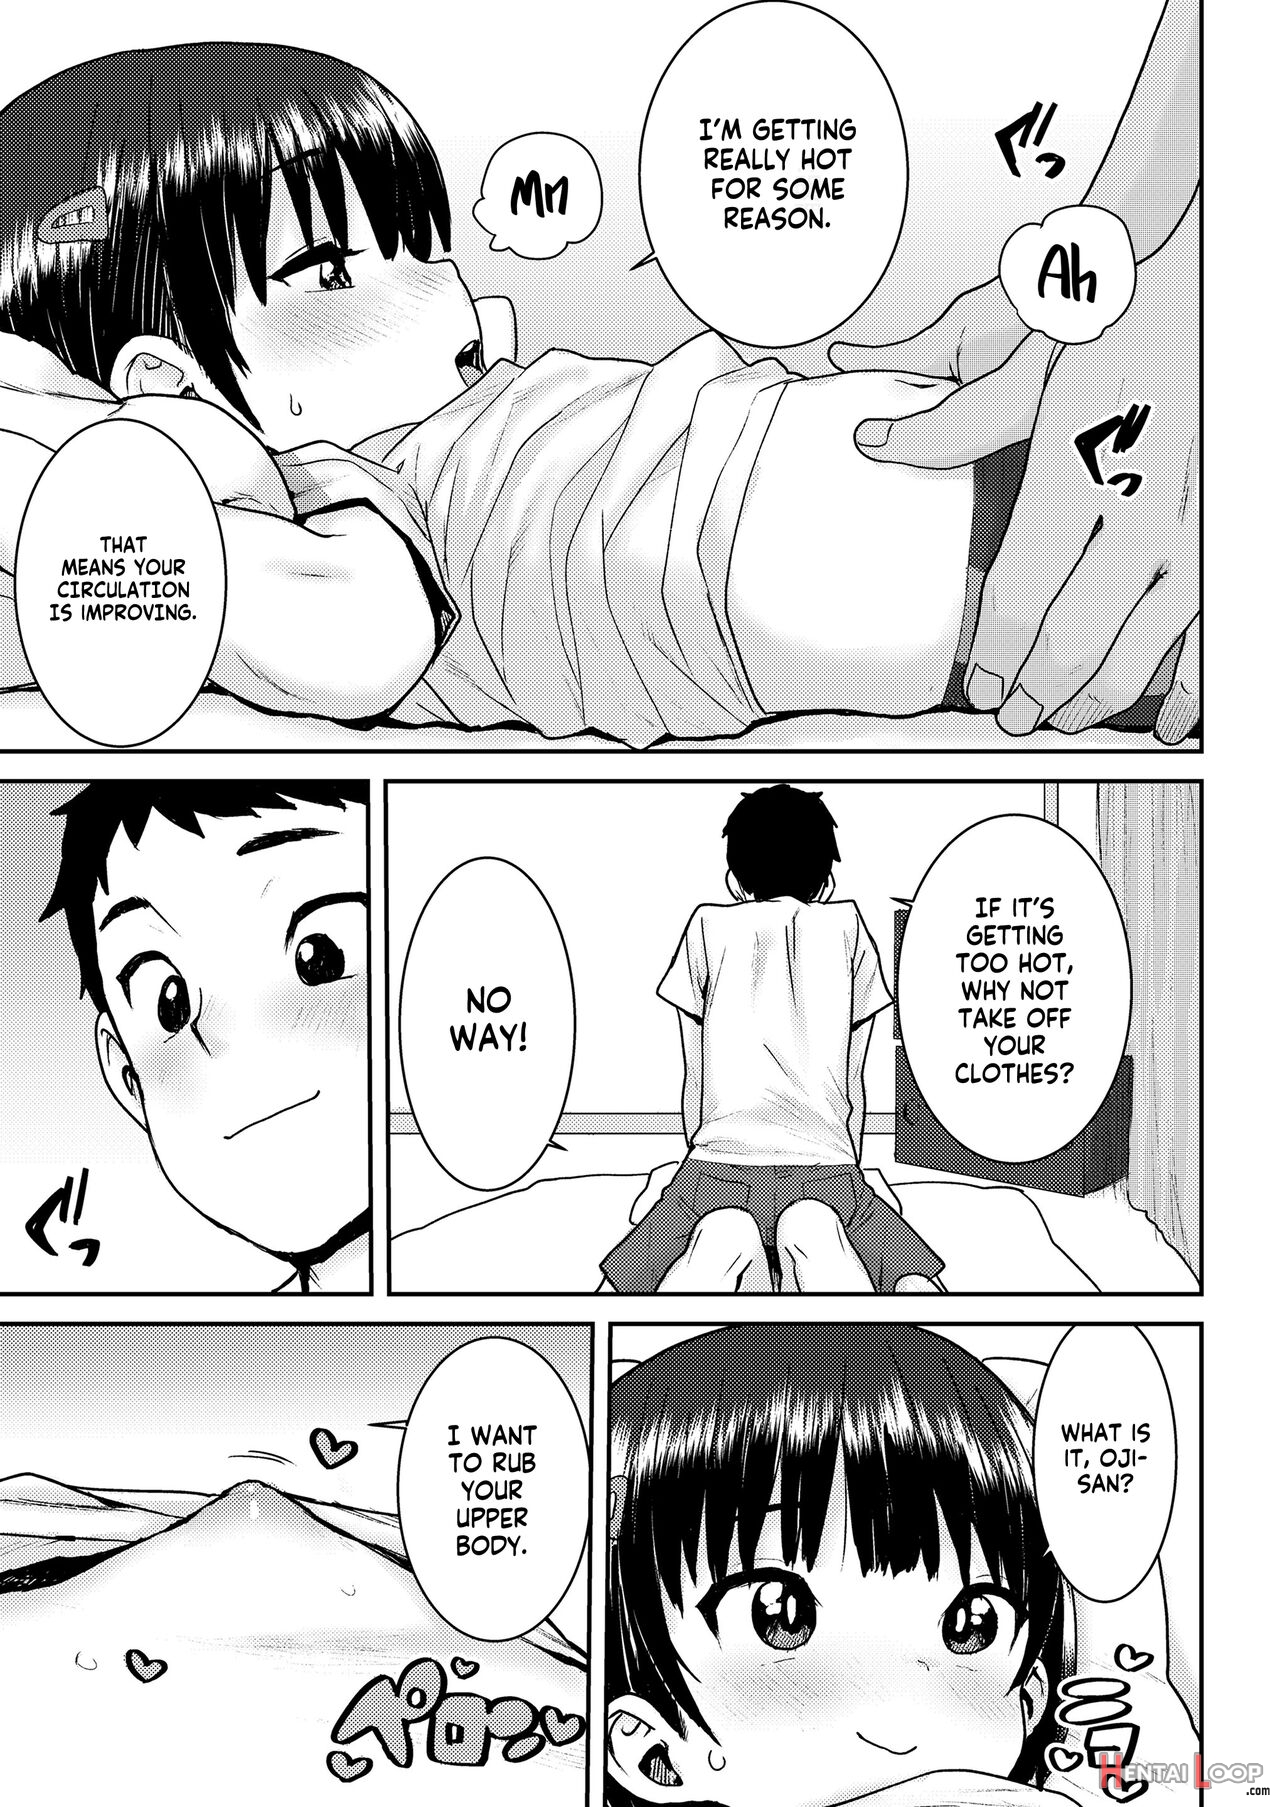 Unathletic Akari-chan page 7